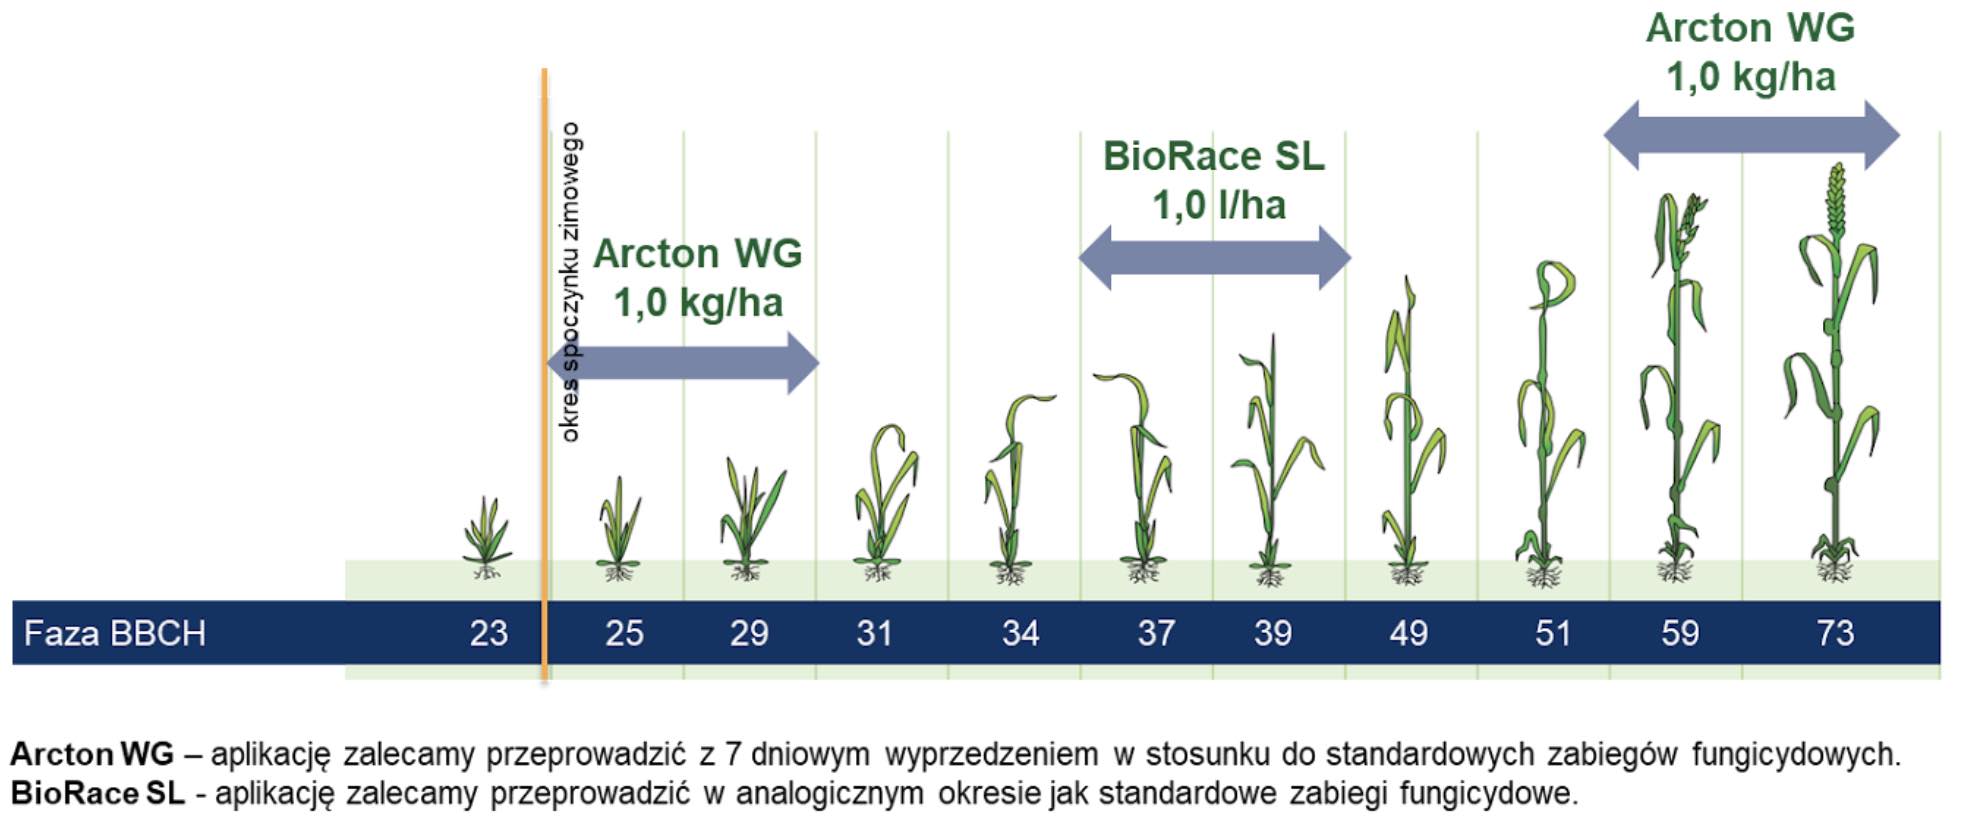 Schemat stosowania Arcton WG oraz Biorace SL